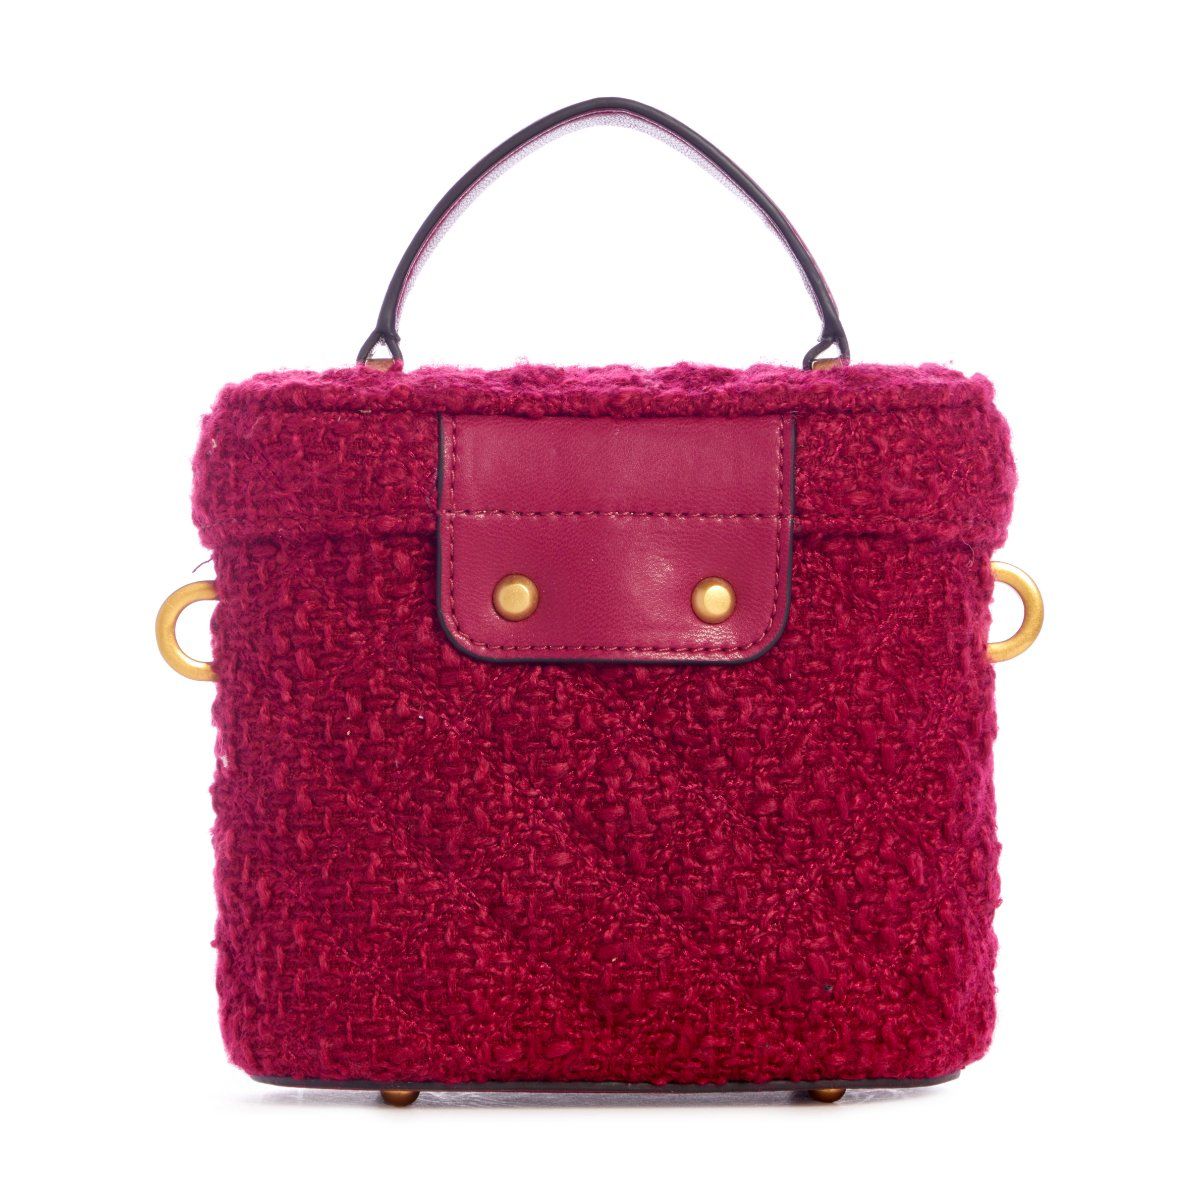 Guess Giully Cannister Handbag: Buy Guess Giully Cannister Handbag